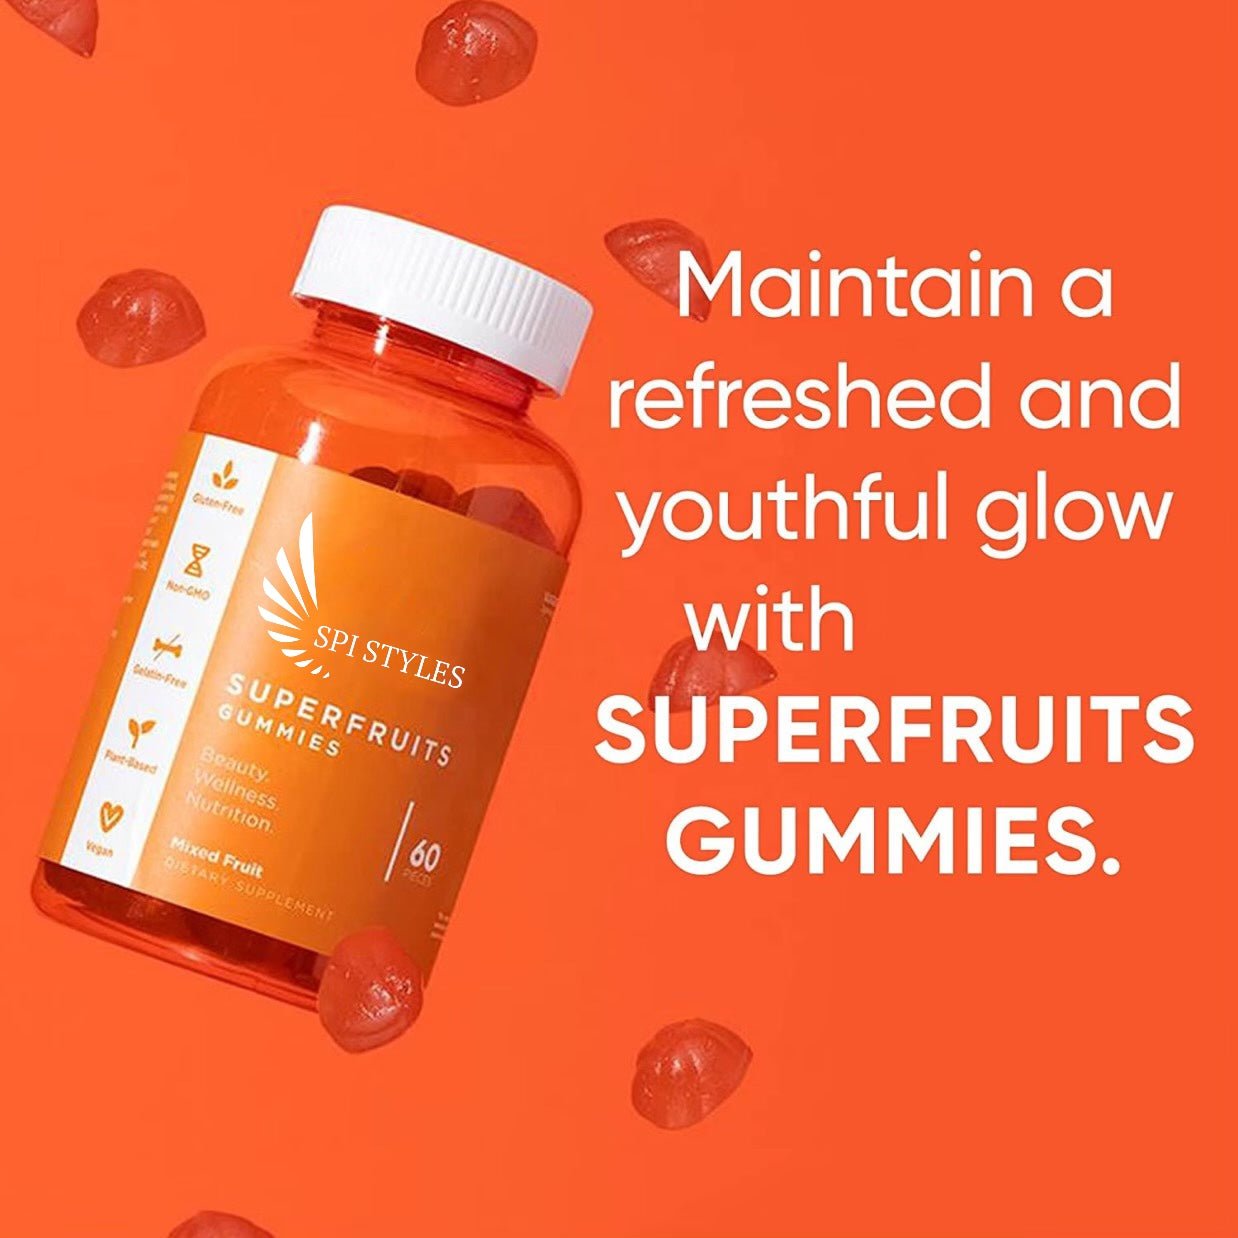 SPI Styles Superfruit Gummies